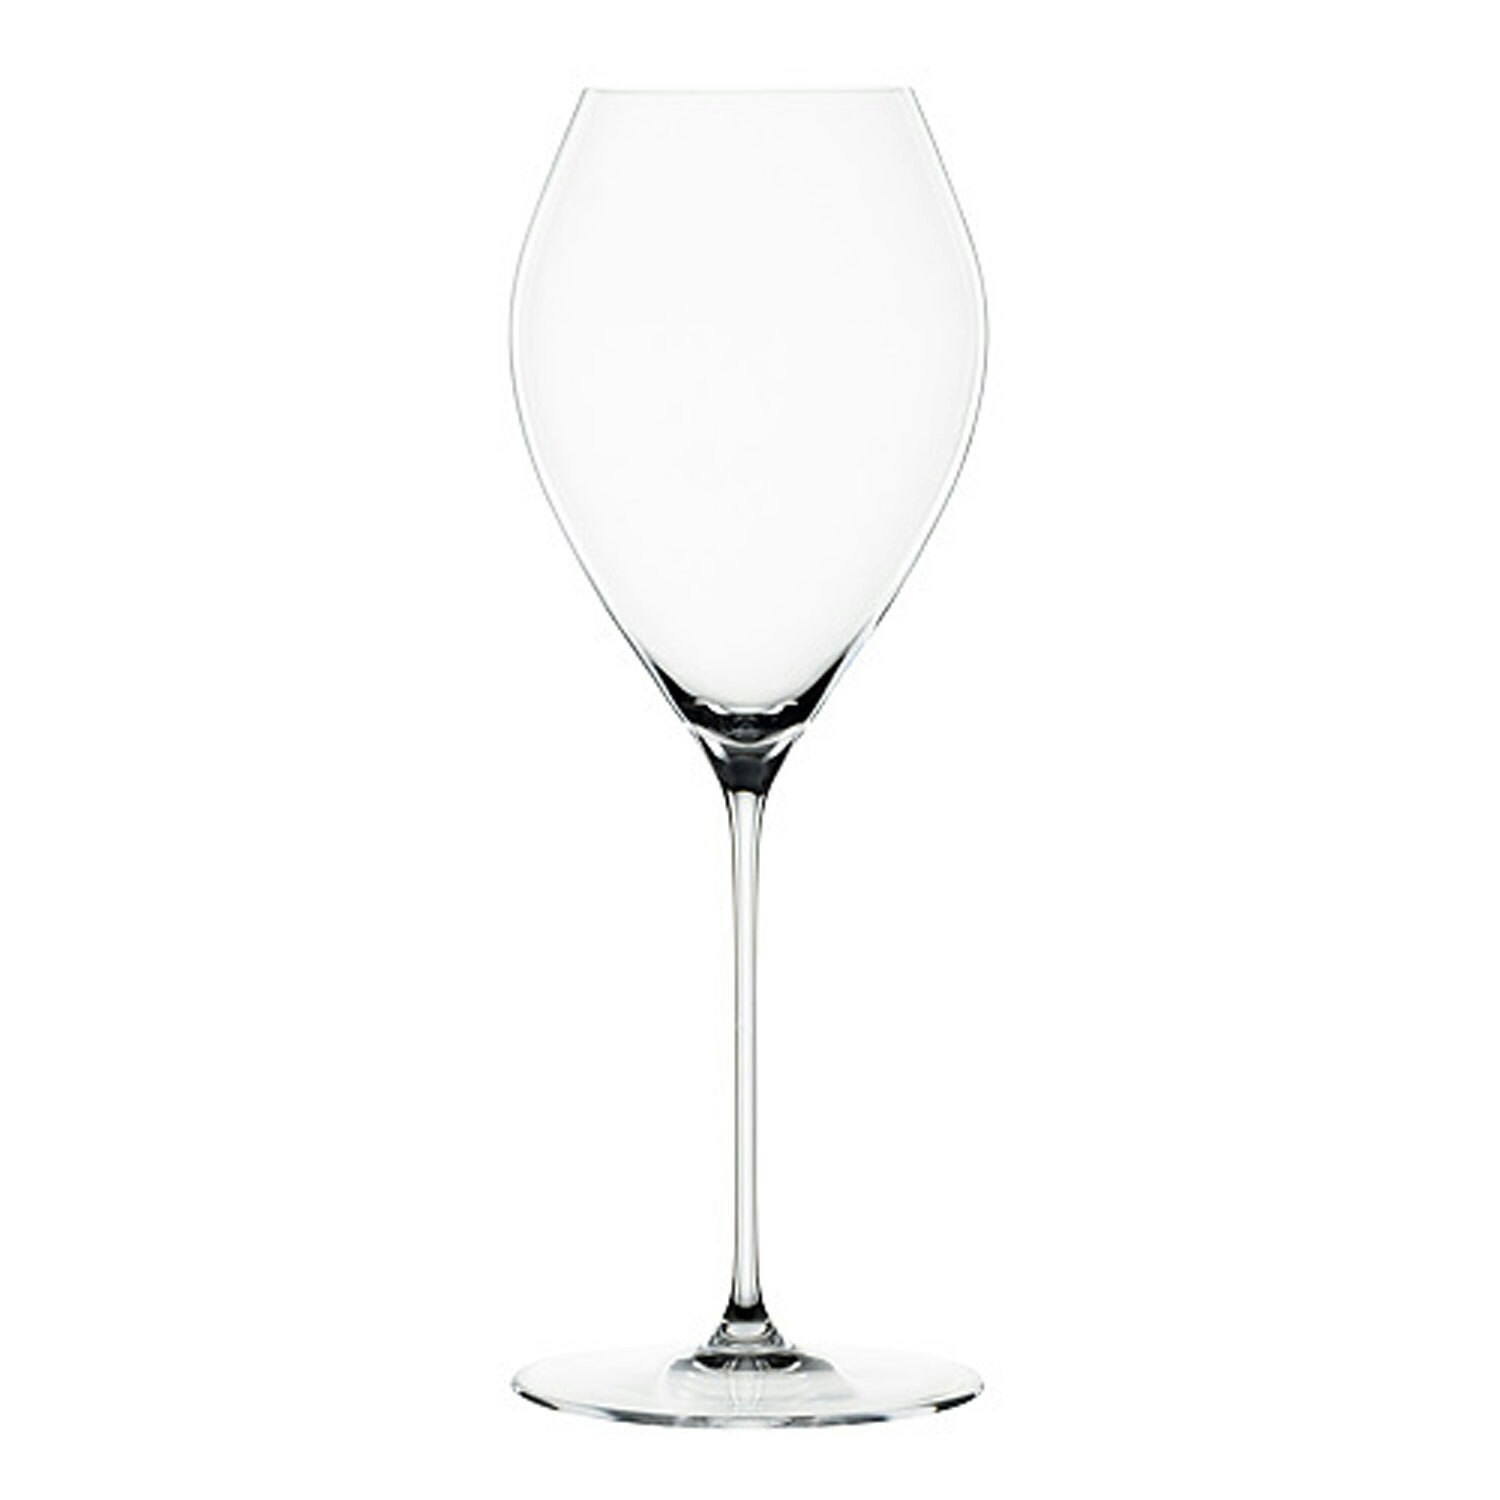 https://royaldesign.com/image/10/spiegelau-spumante-champagne-glass-50-cl-0